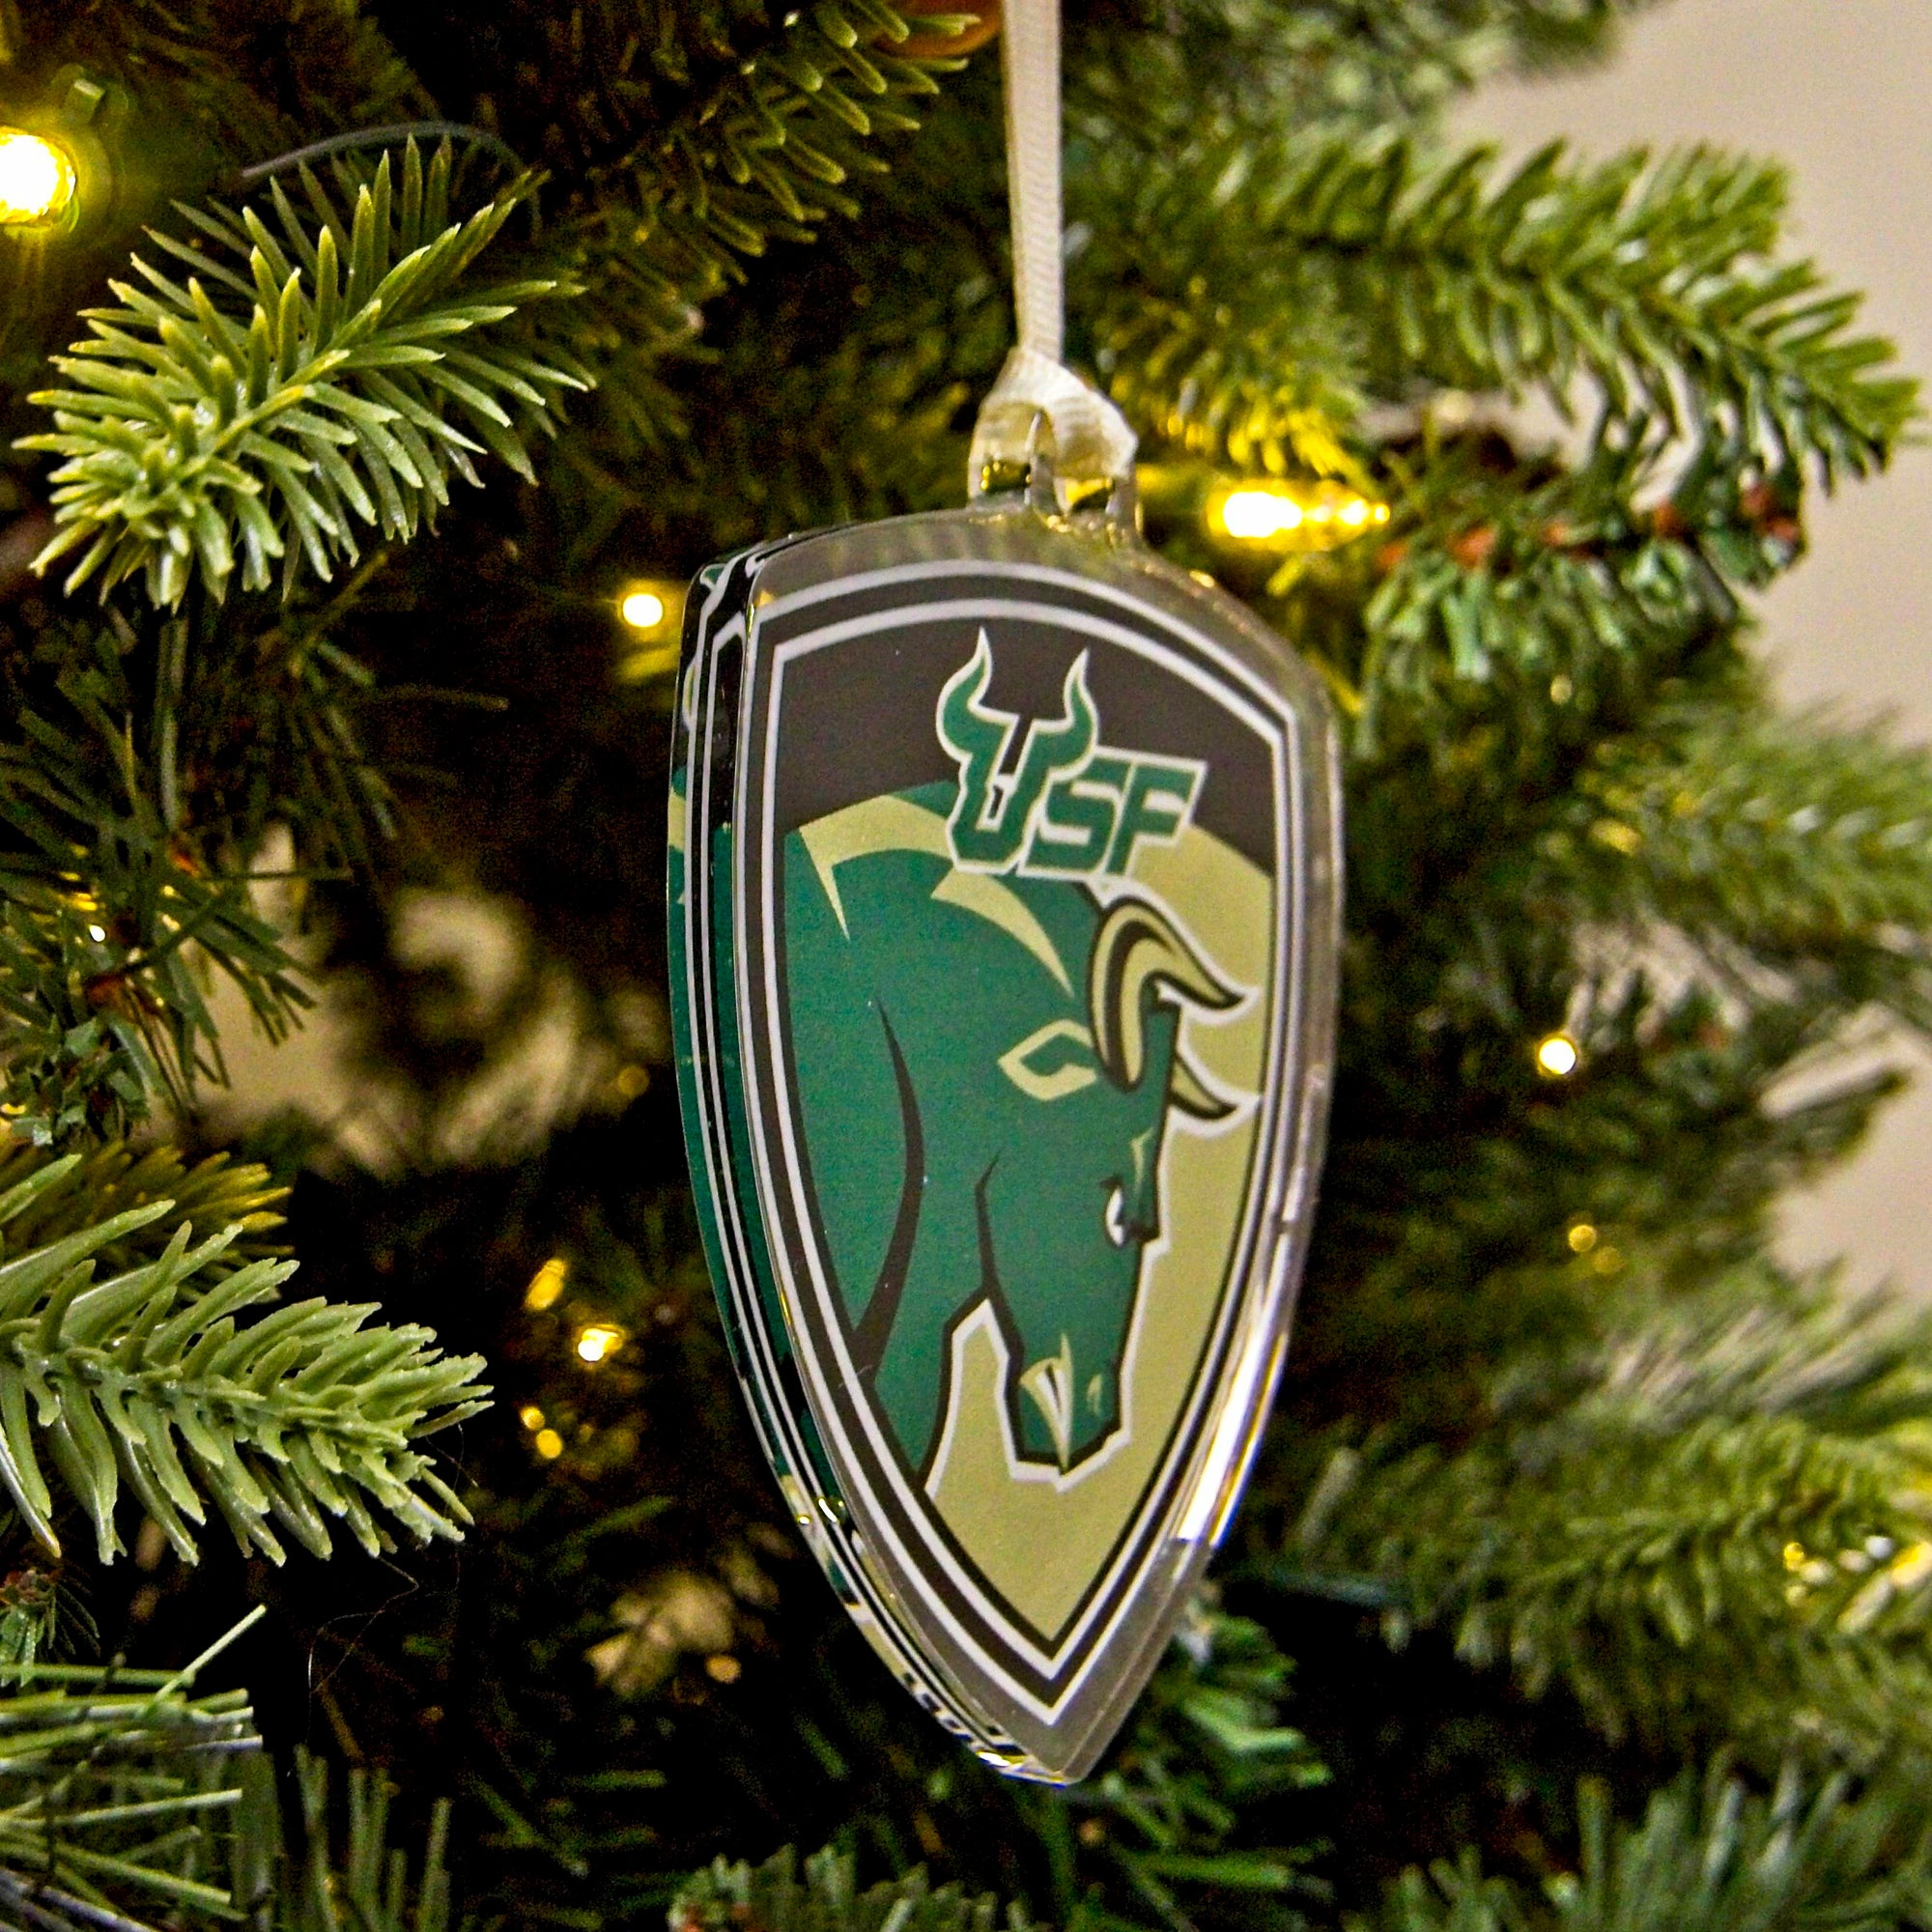 USF Bulls - USF Shield Ornament & Bag Tag